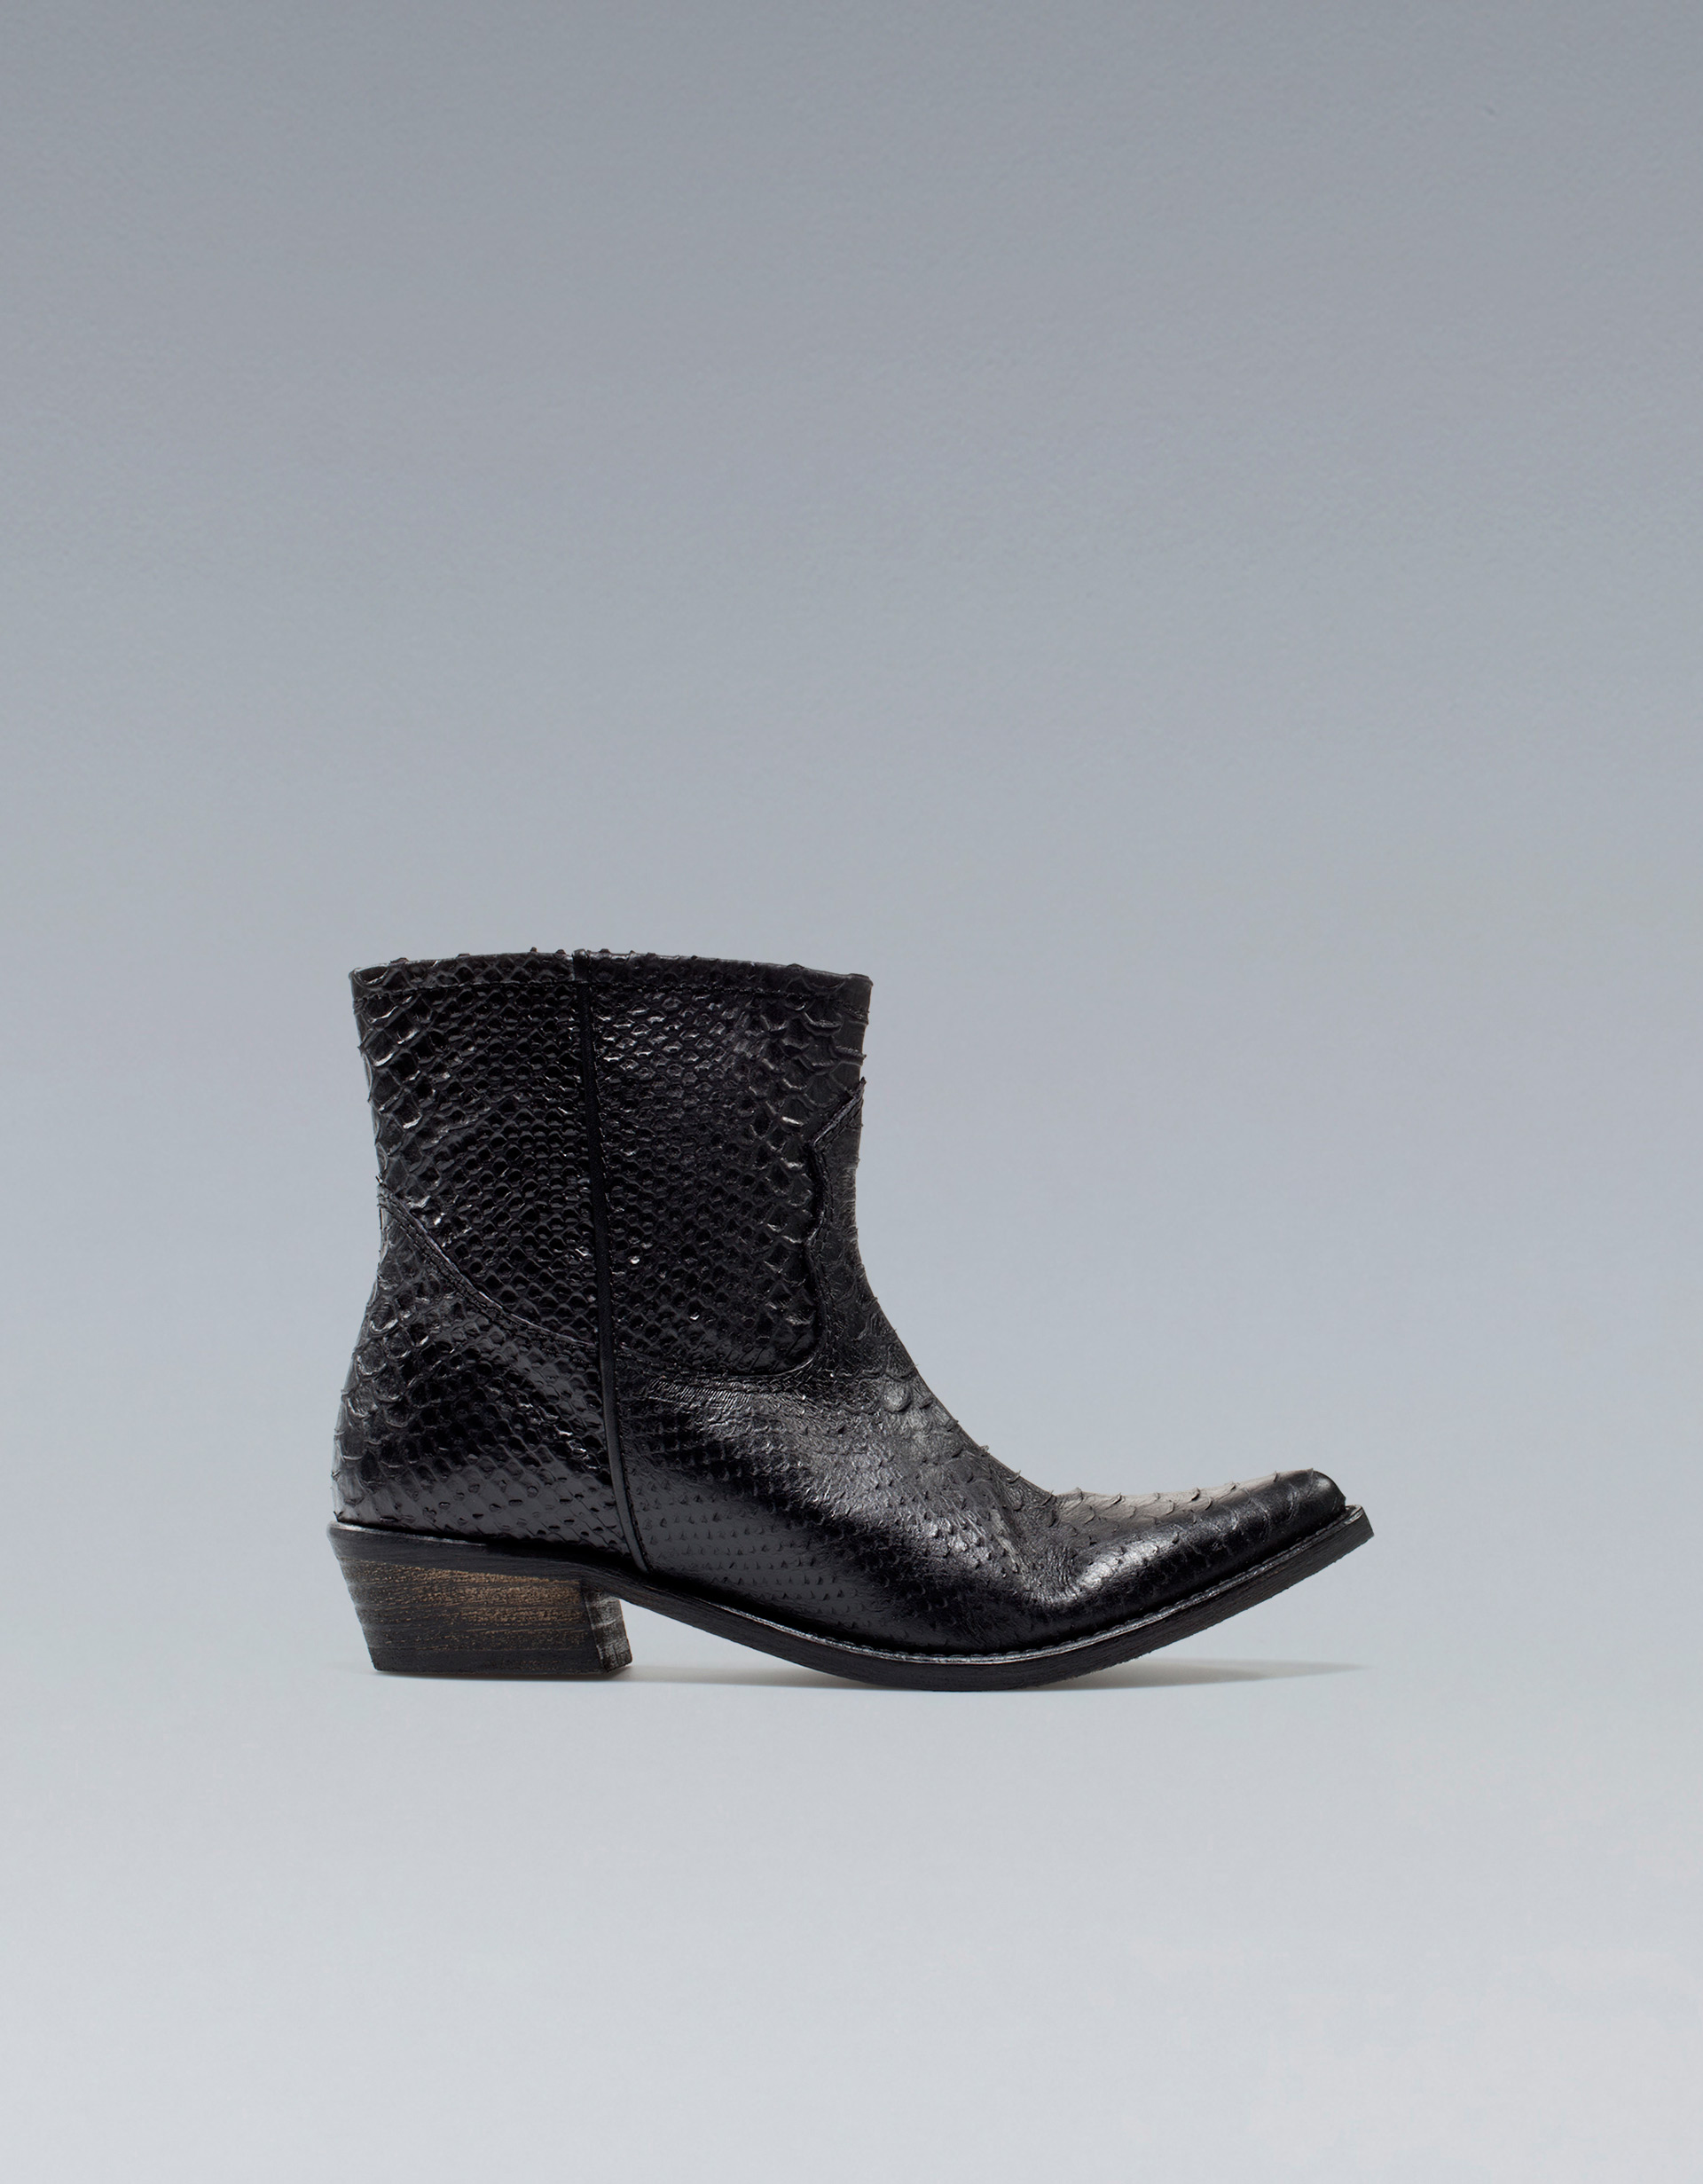 Zara Snakeskin Cowboy Ankle Boot in Black | Lyst